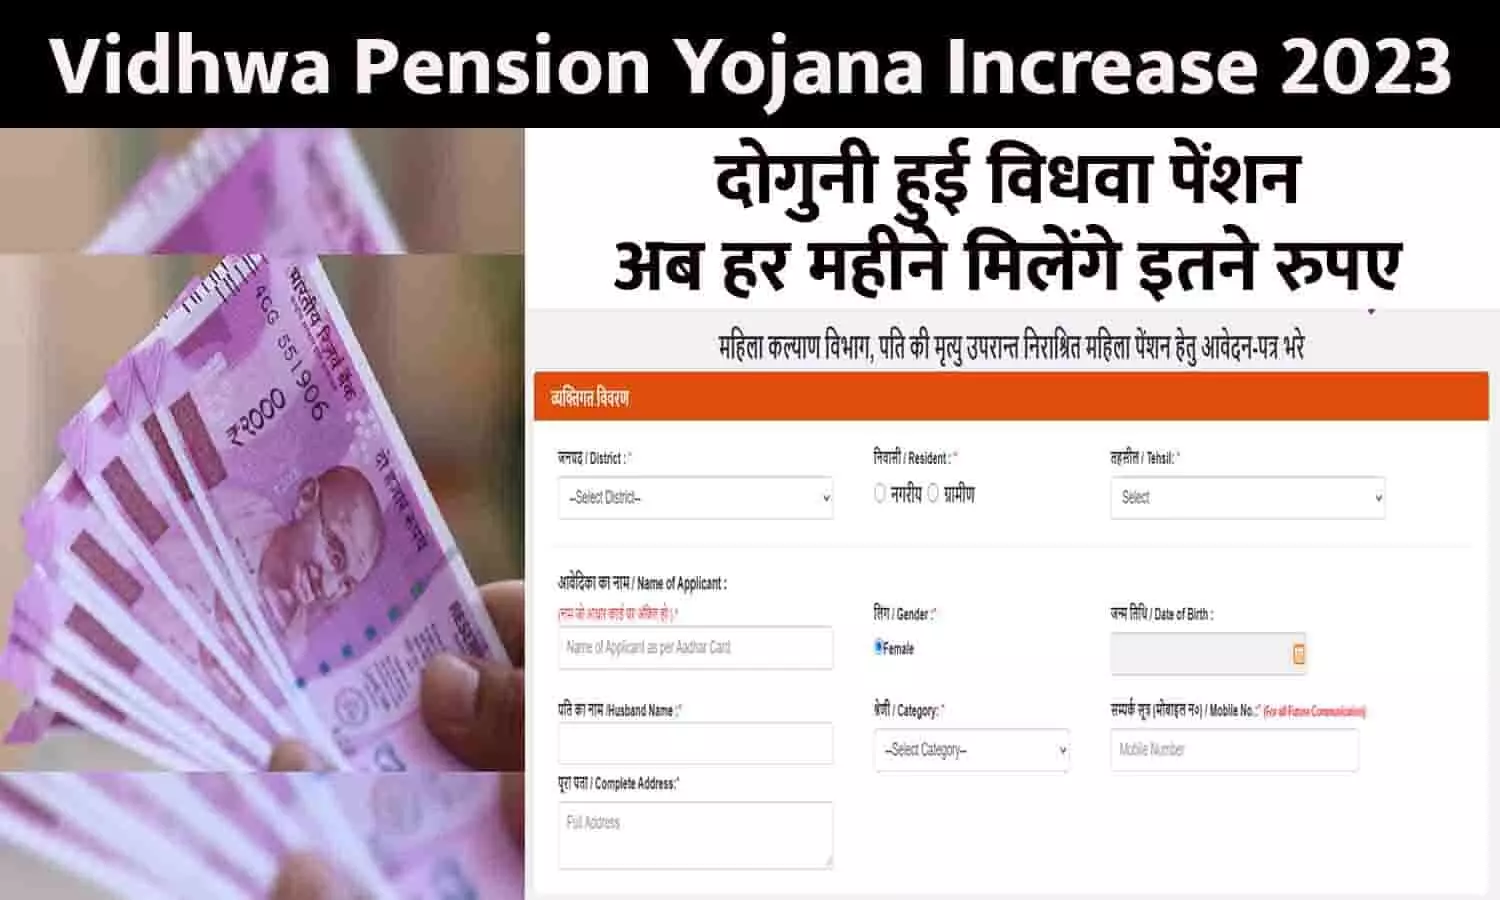 Vidhwa Pension Yojana Increase Big Alert 2023: दोगुनी हुई विधवा पेंशन, अब हर महीने मिलेंगे इतने रुपए, फटाफट ध्यान दे